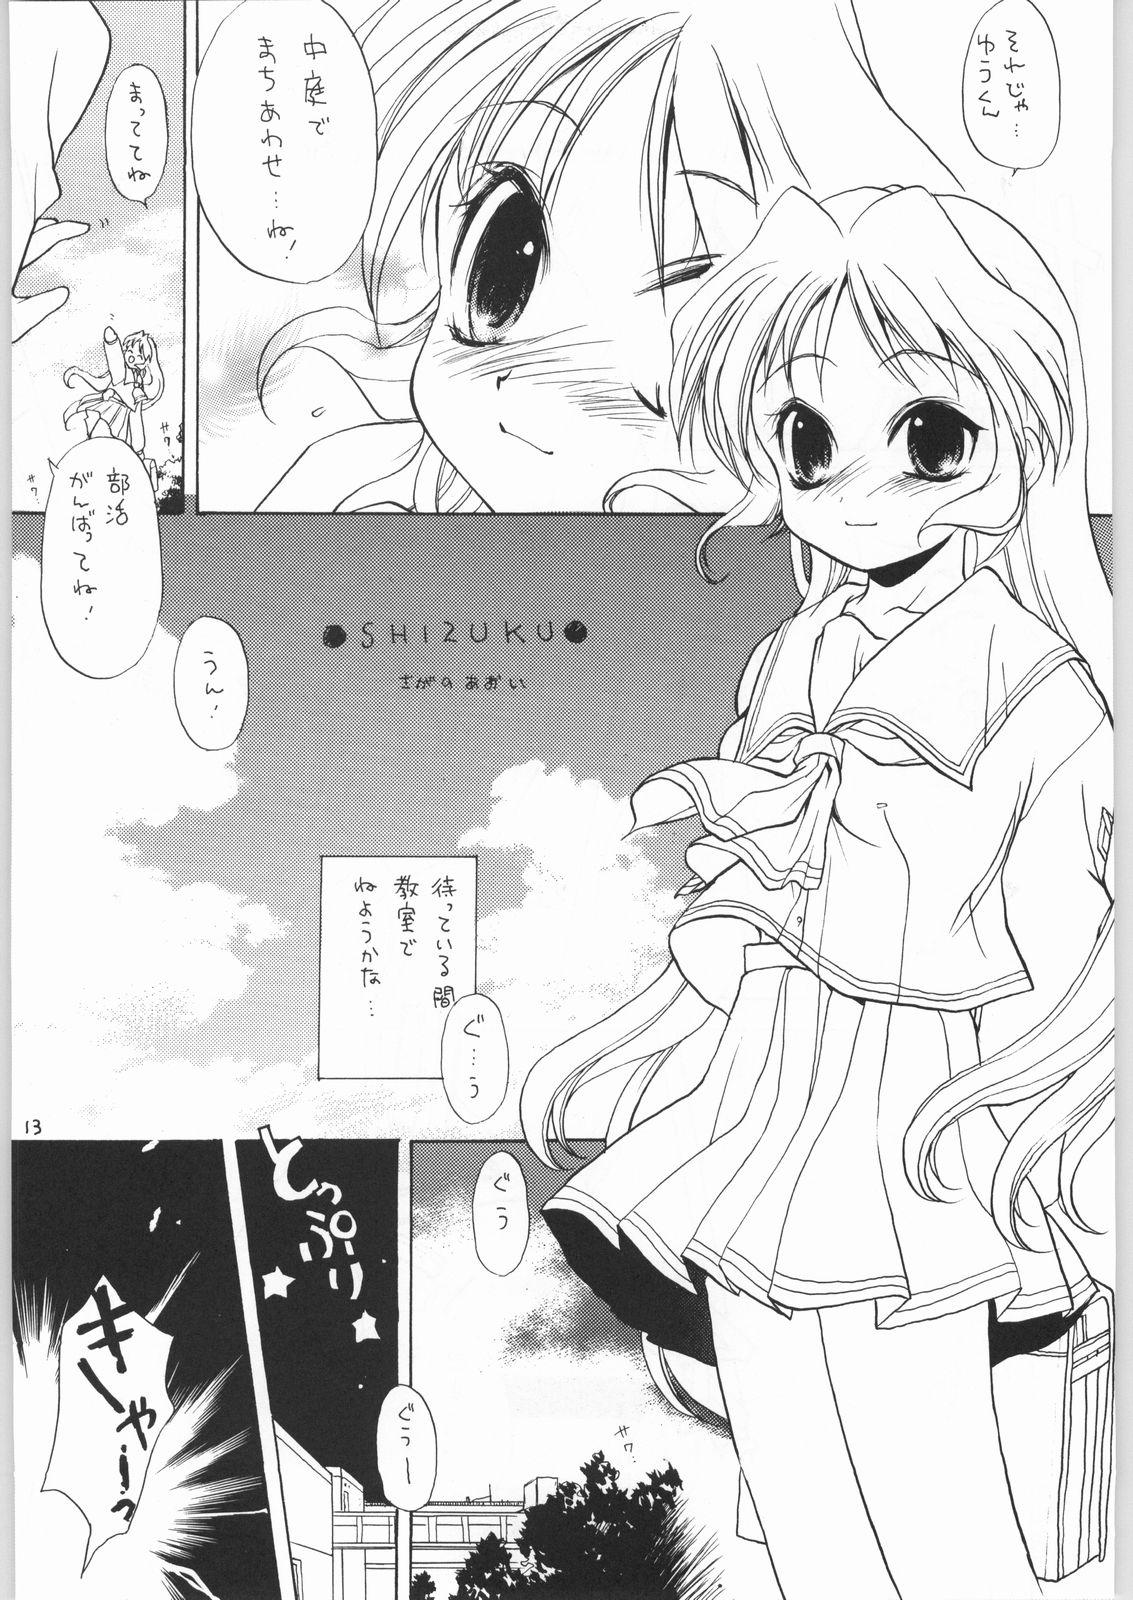 Load - LOVE TOGETHER!! - Kanon Kizuato Harcore - Page 12